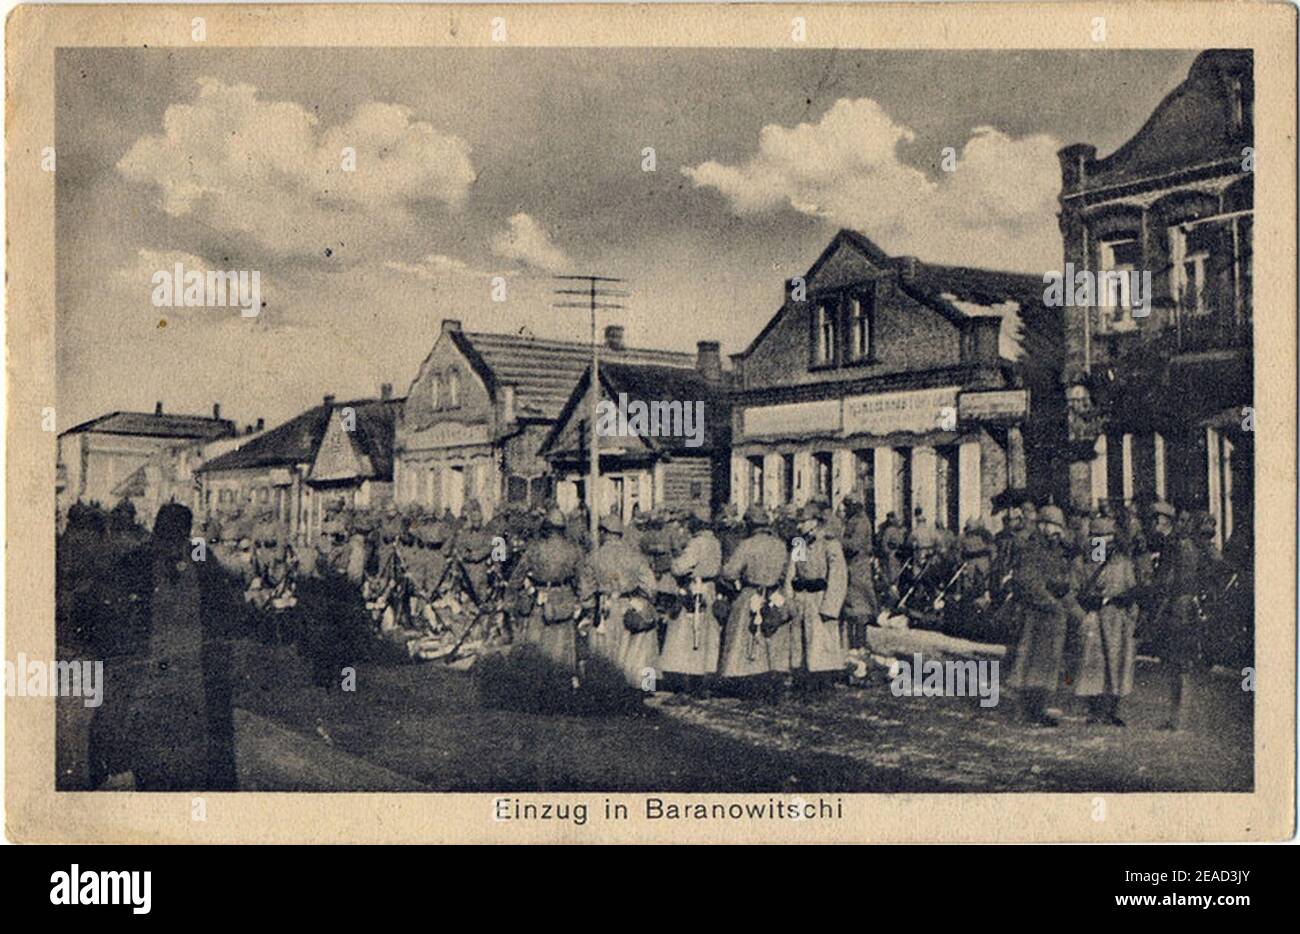 Niemcy uvachod 1915 m feldpost20-08-1916. Stock Photo